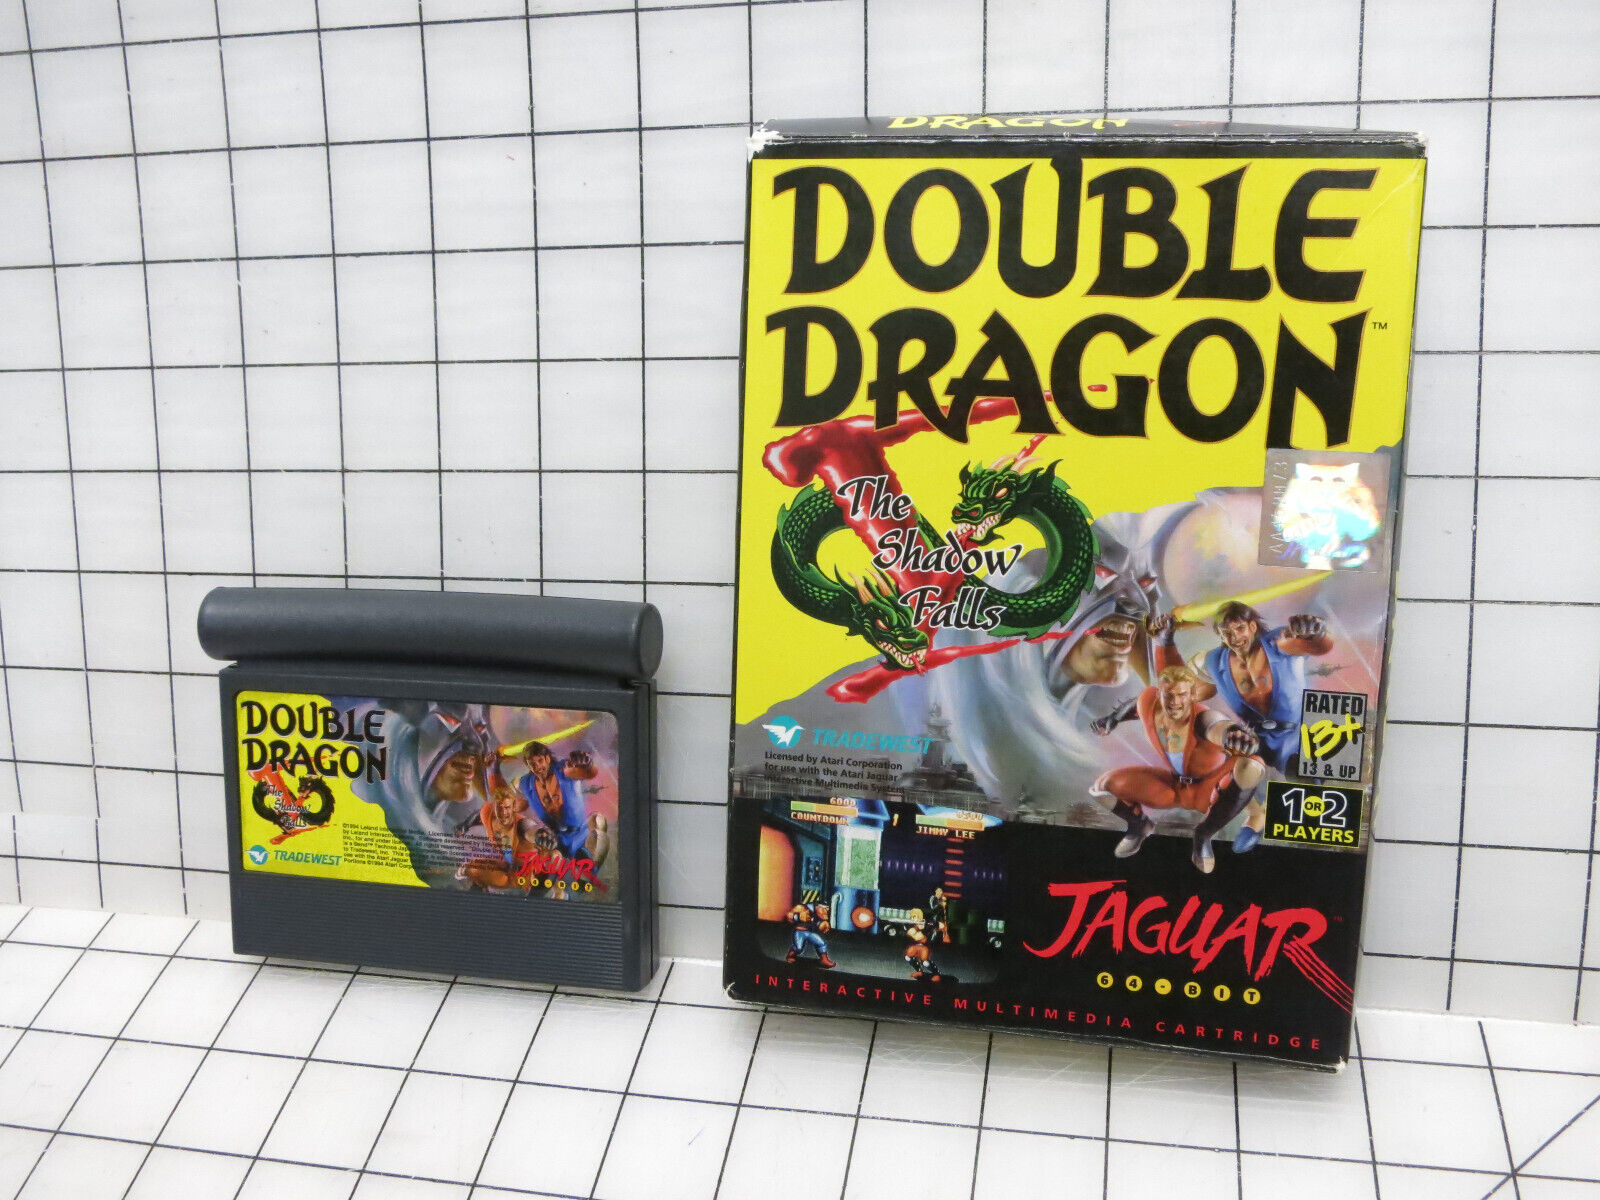 Double Dragon V: The Shadow Falls Video Game for Atari Jaguar with Original Box